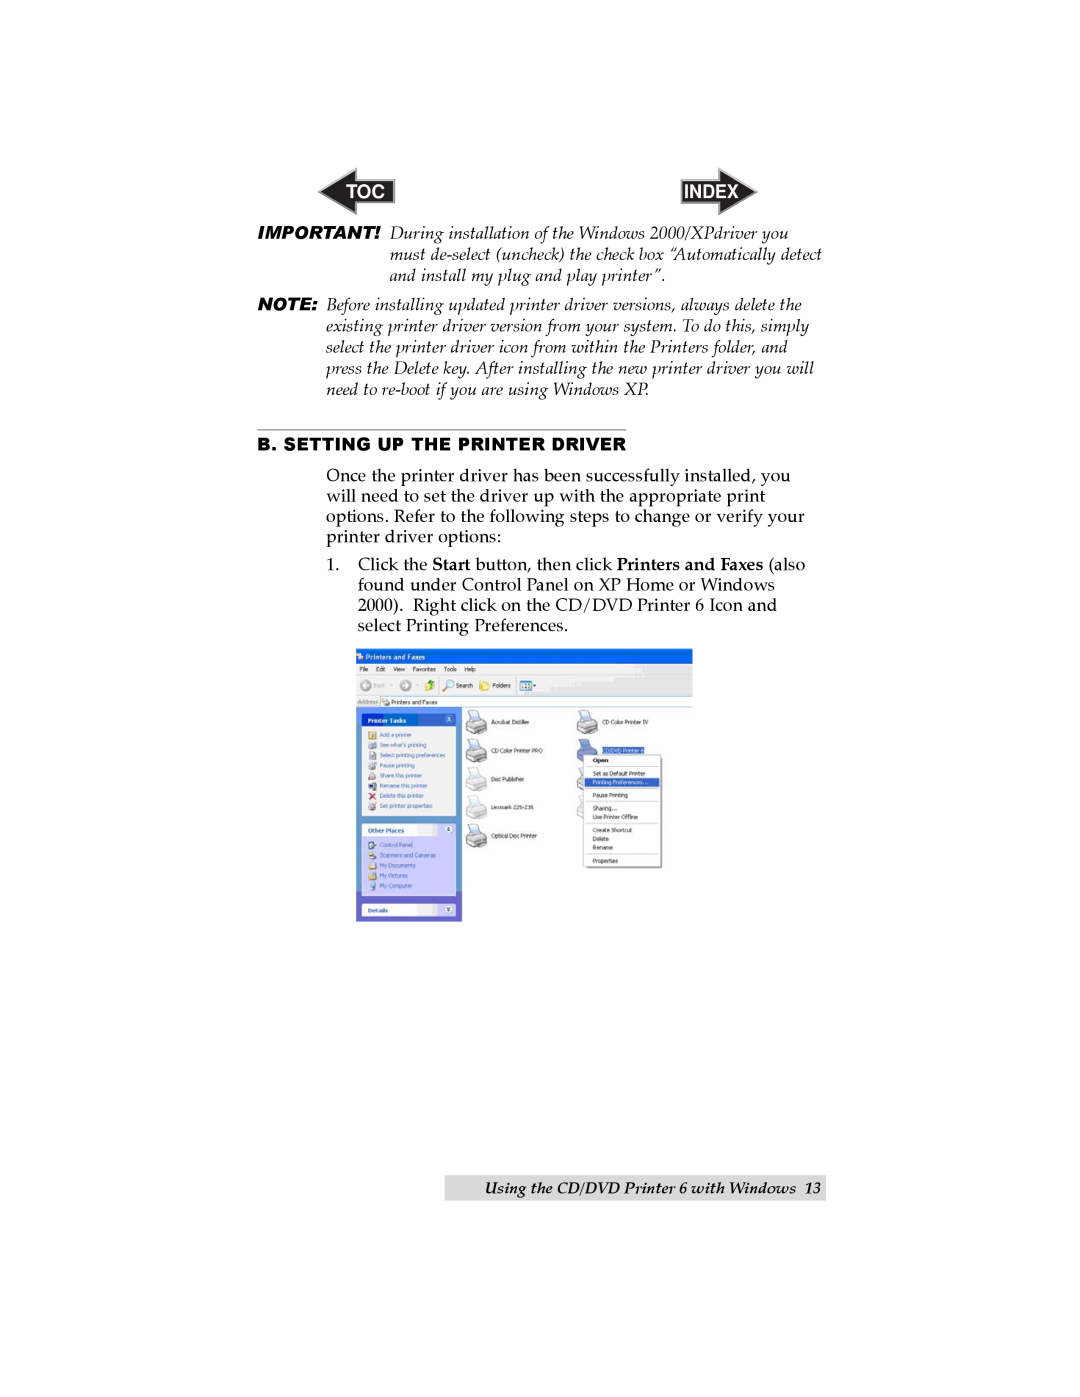 Primera Technology 6 user manual Index, B. Setting Up The Printer Driver 